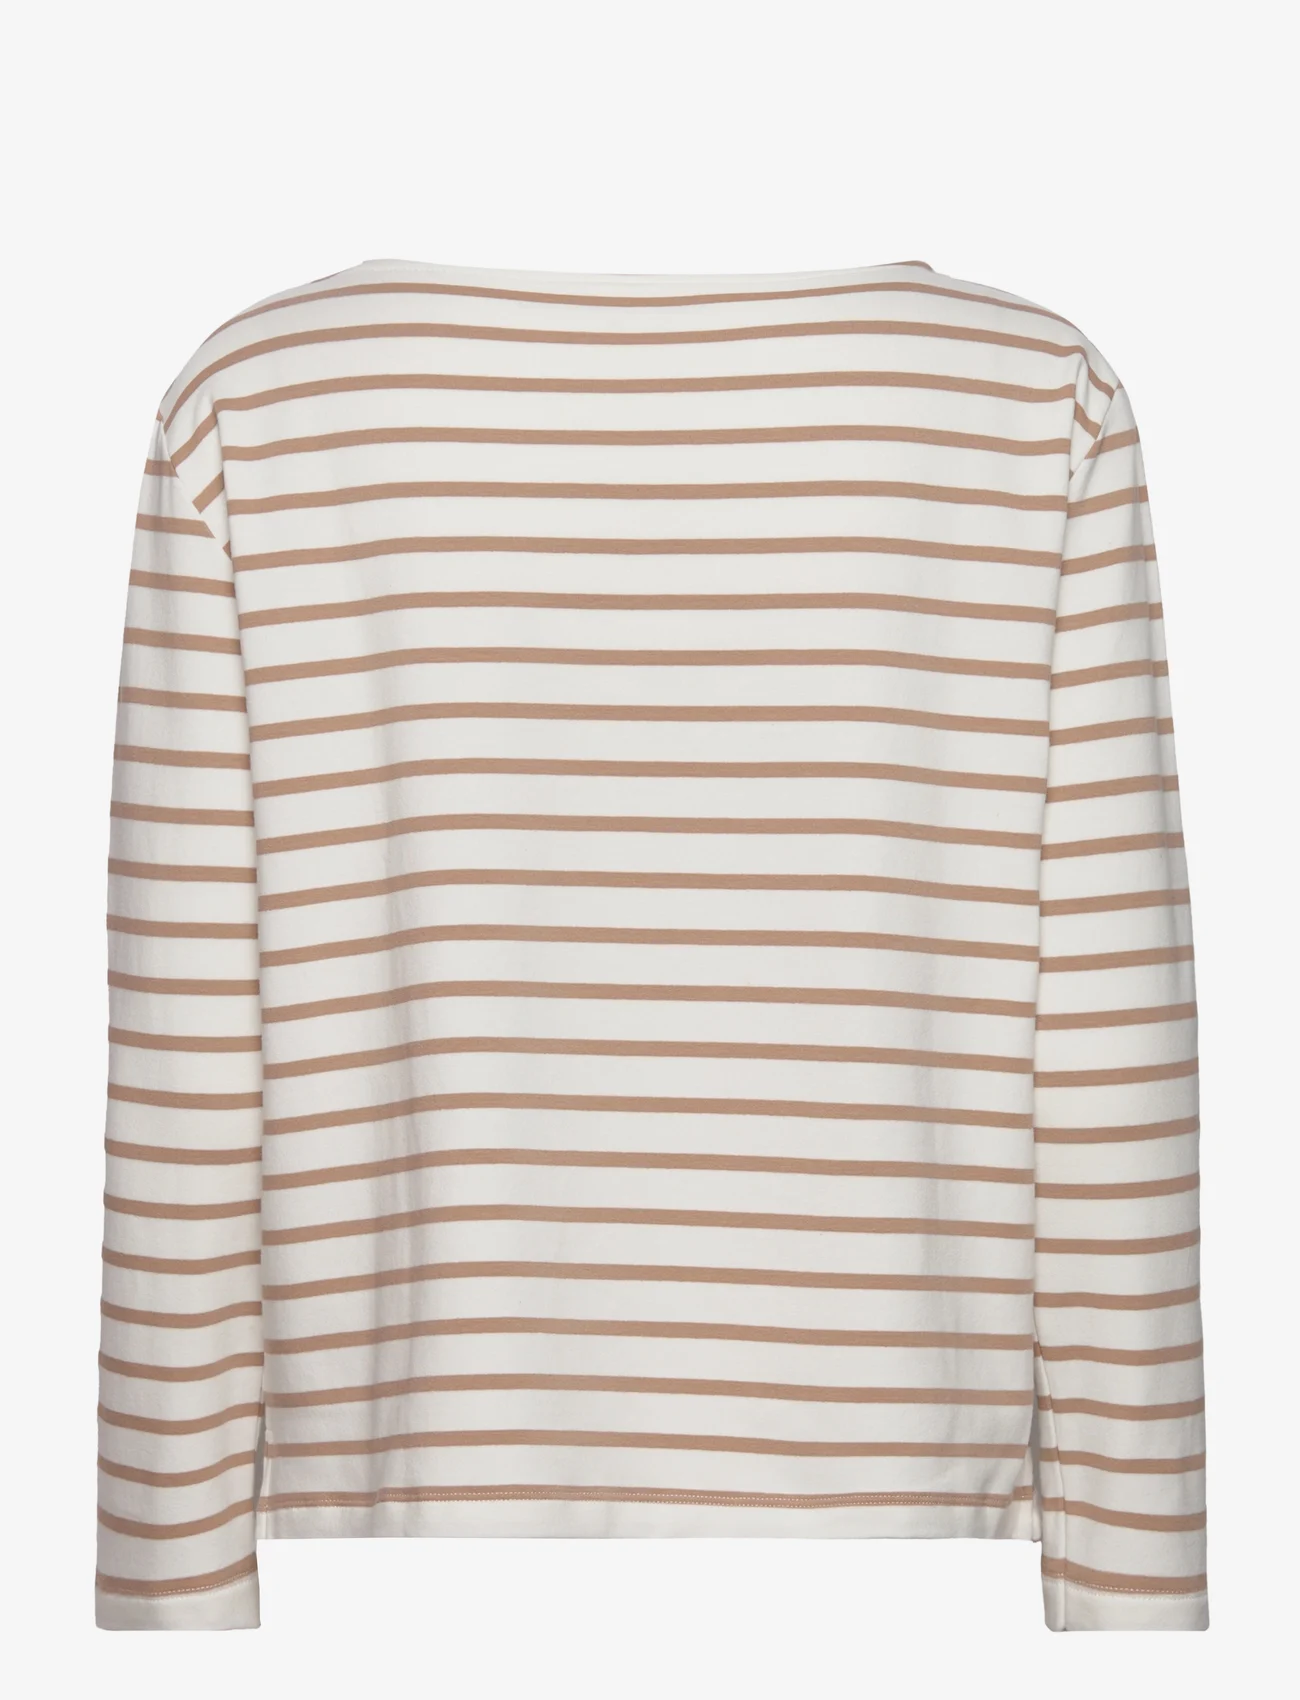 Moshi Moshi Mind - blessed sweatshirt stripe - t-shirts & tops - ecru / warm sand - 1